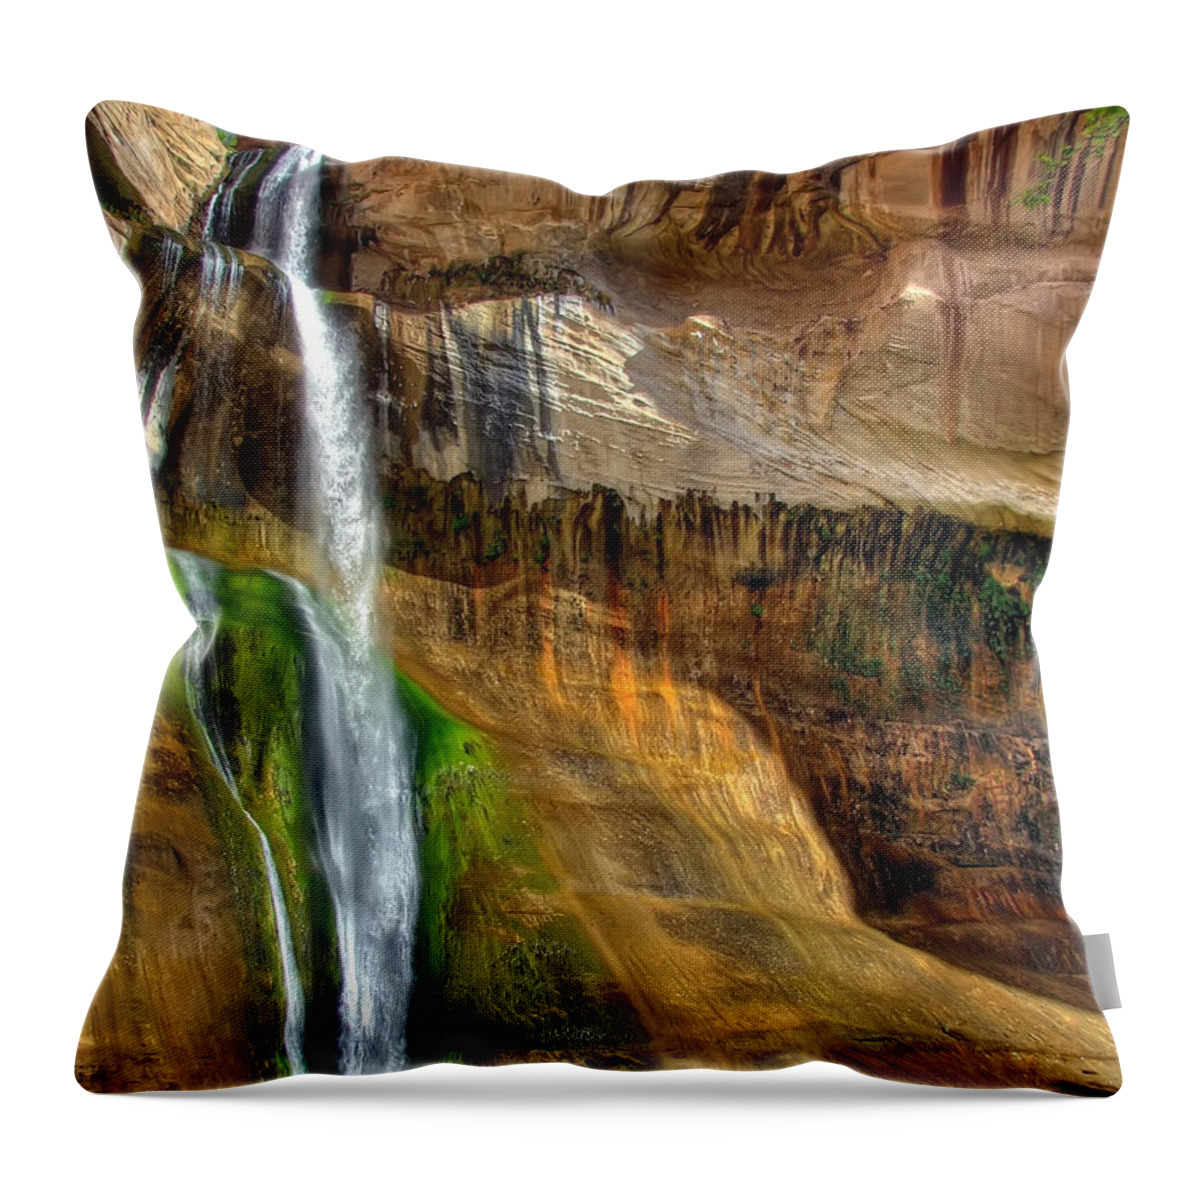 Calf Creek Throw Pillow featuring the photograph Calf Creek Falls by Farol Tomson